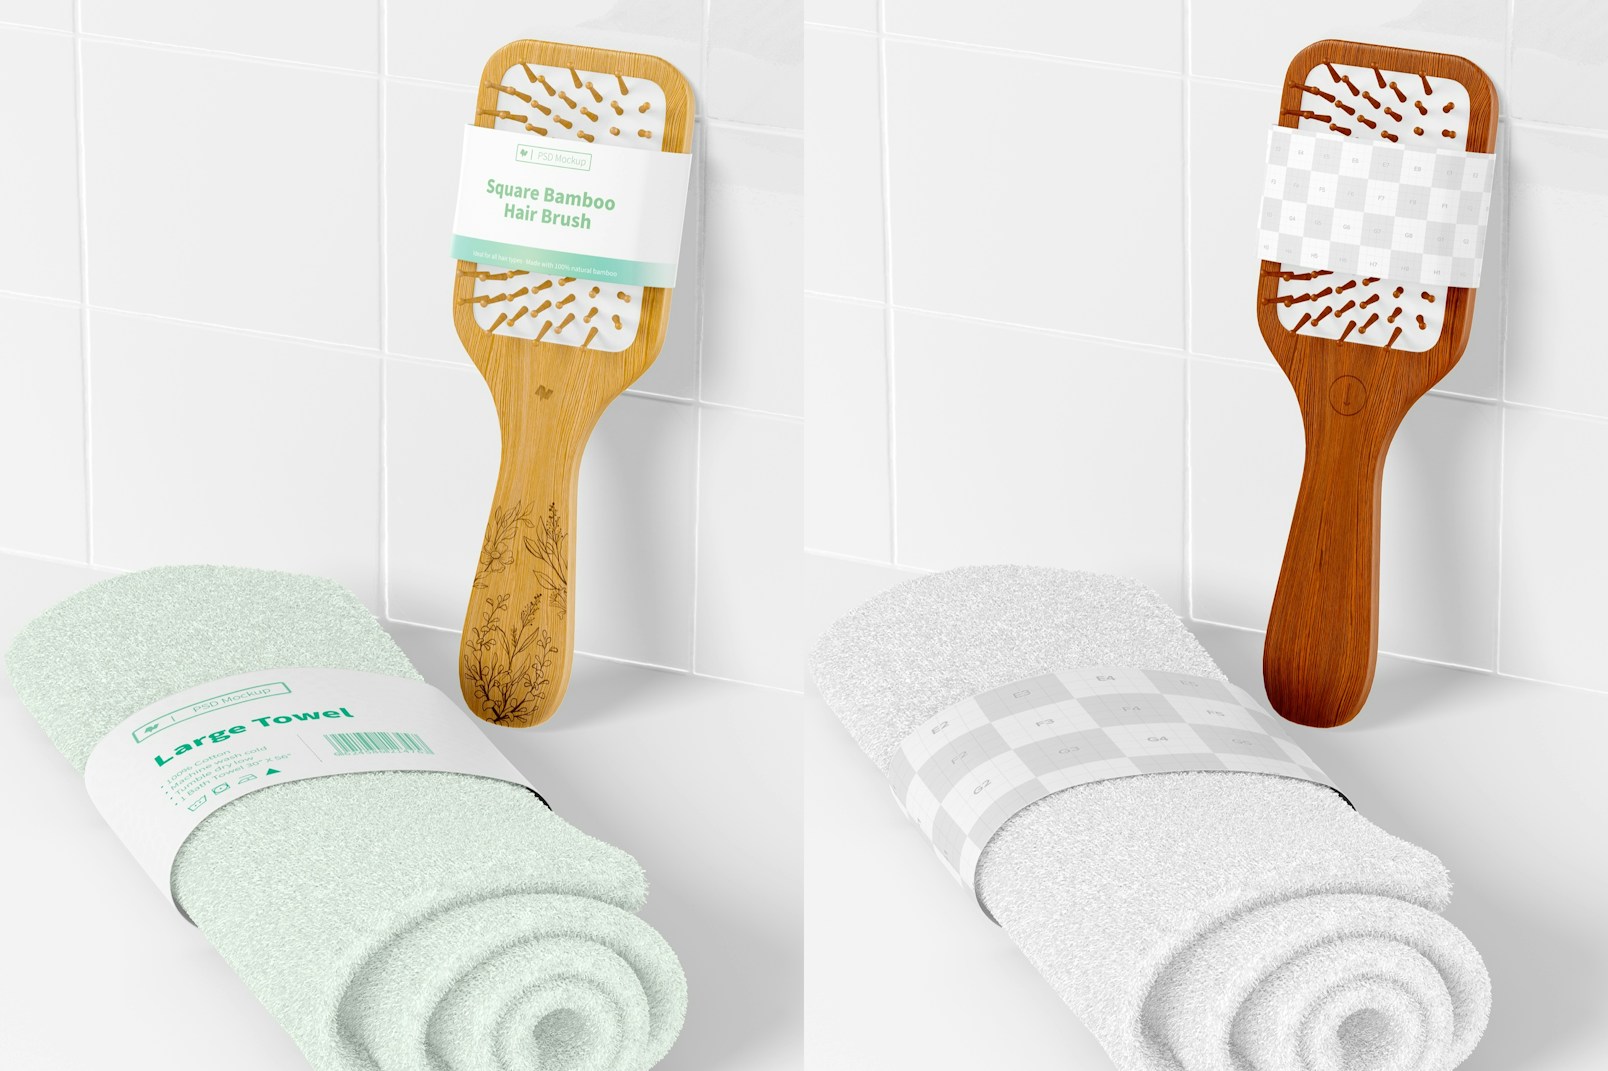 Square Bamboo Hair Brush with Towel Mockup